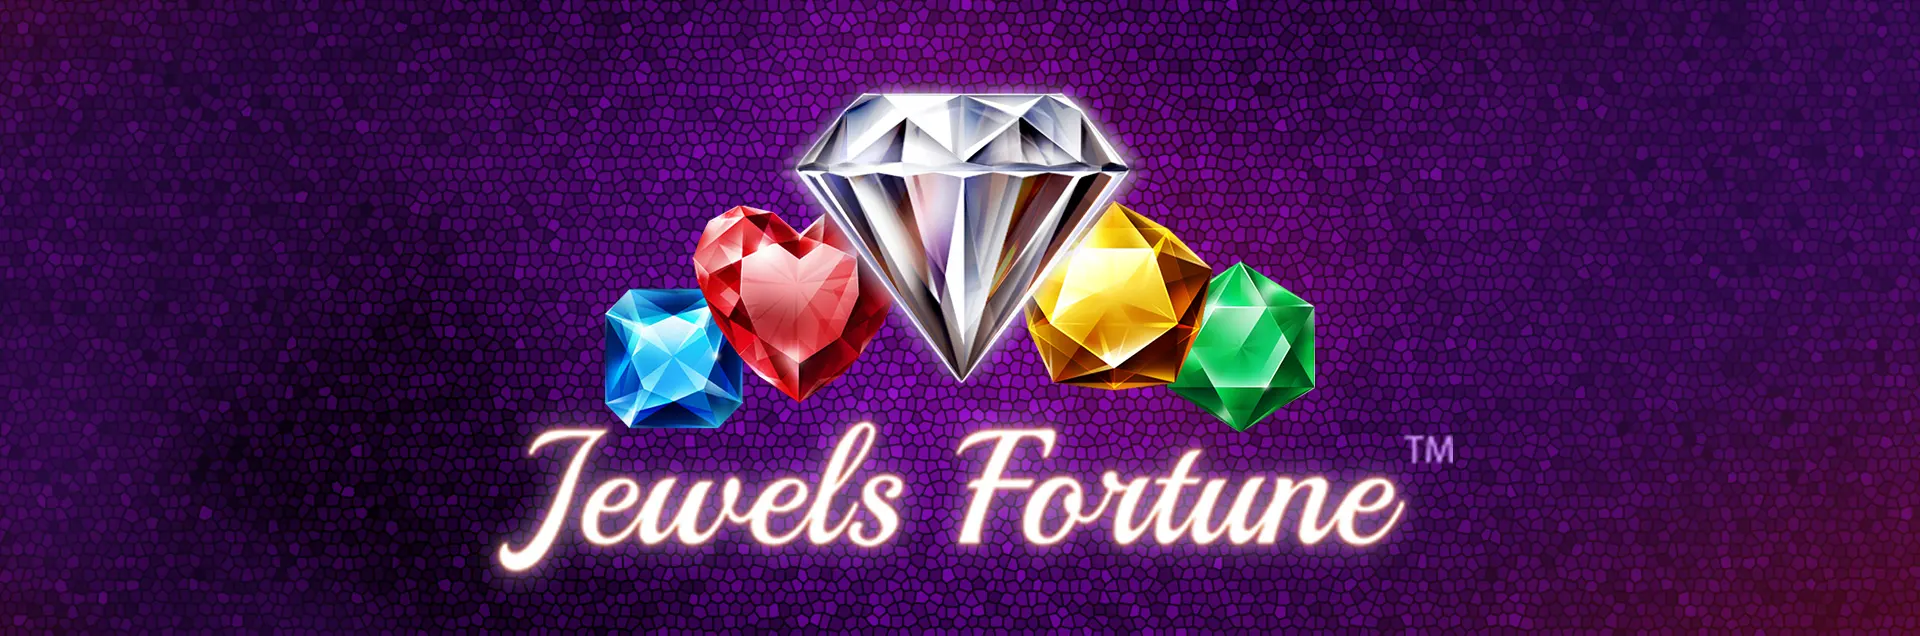 jewels fortune